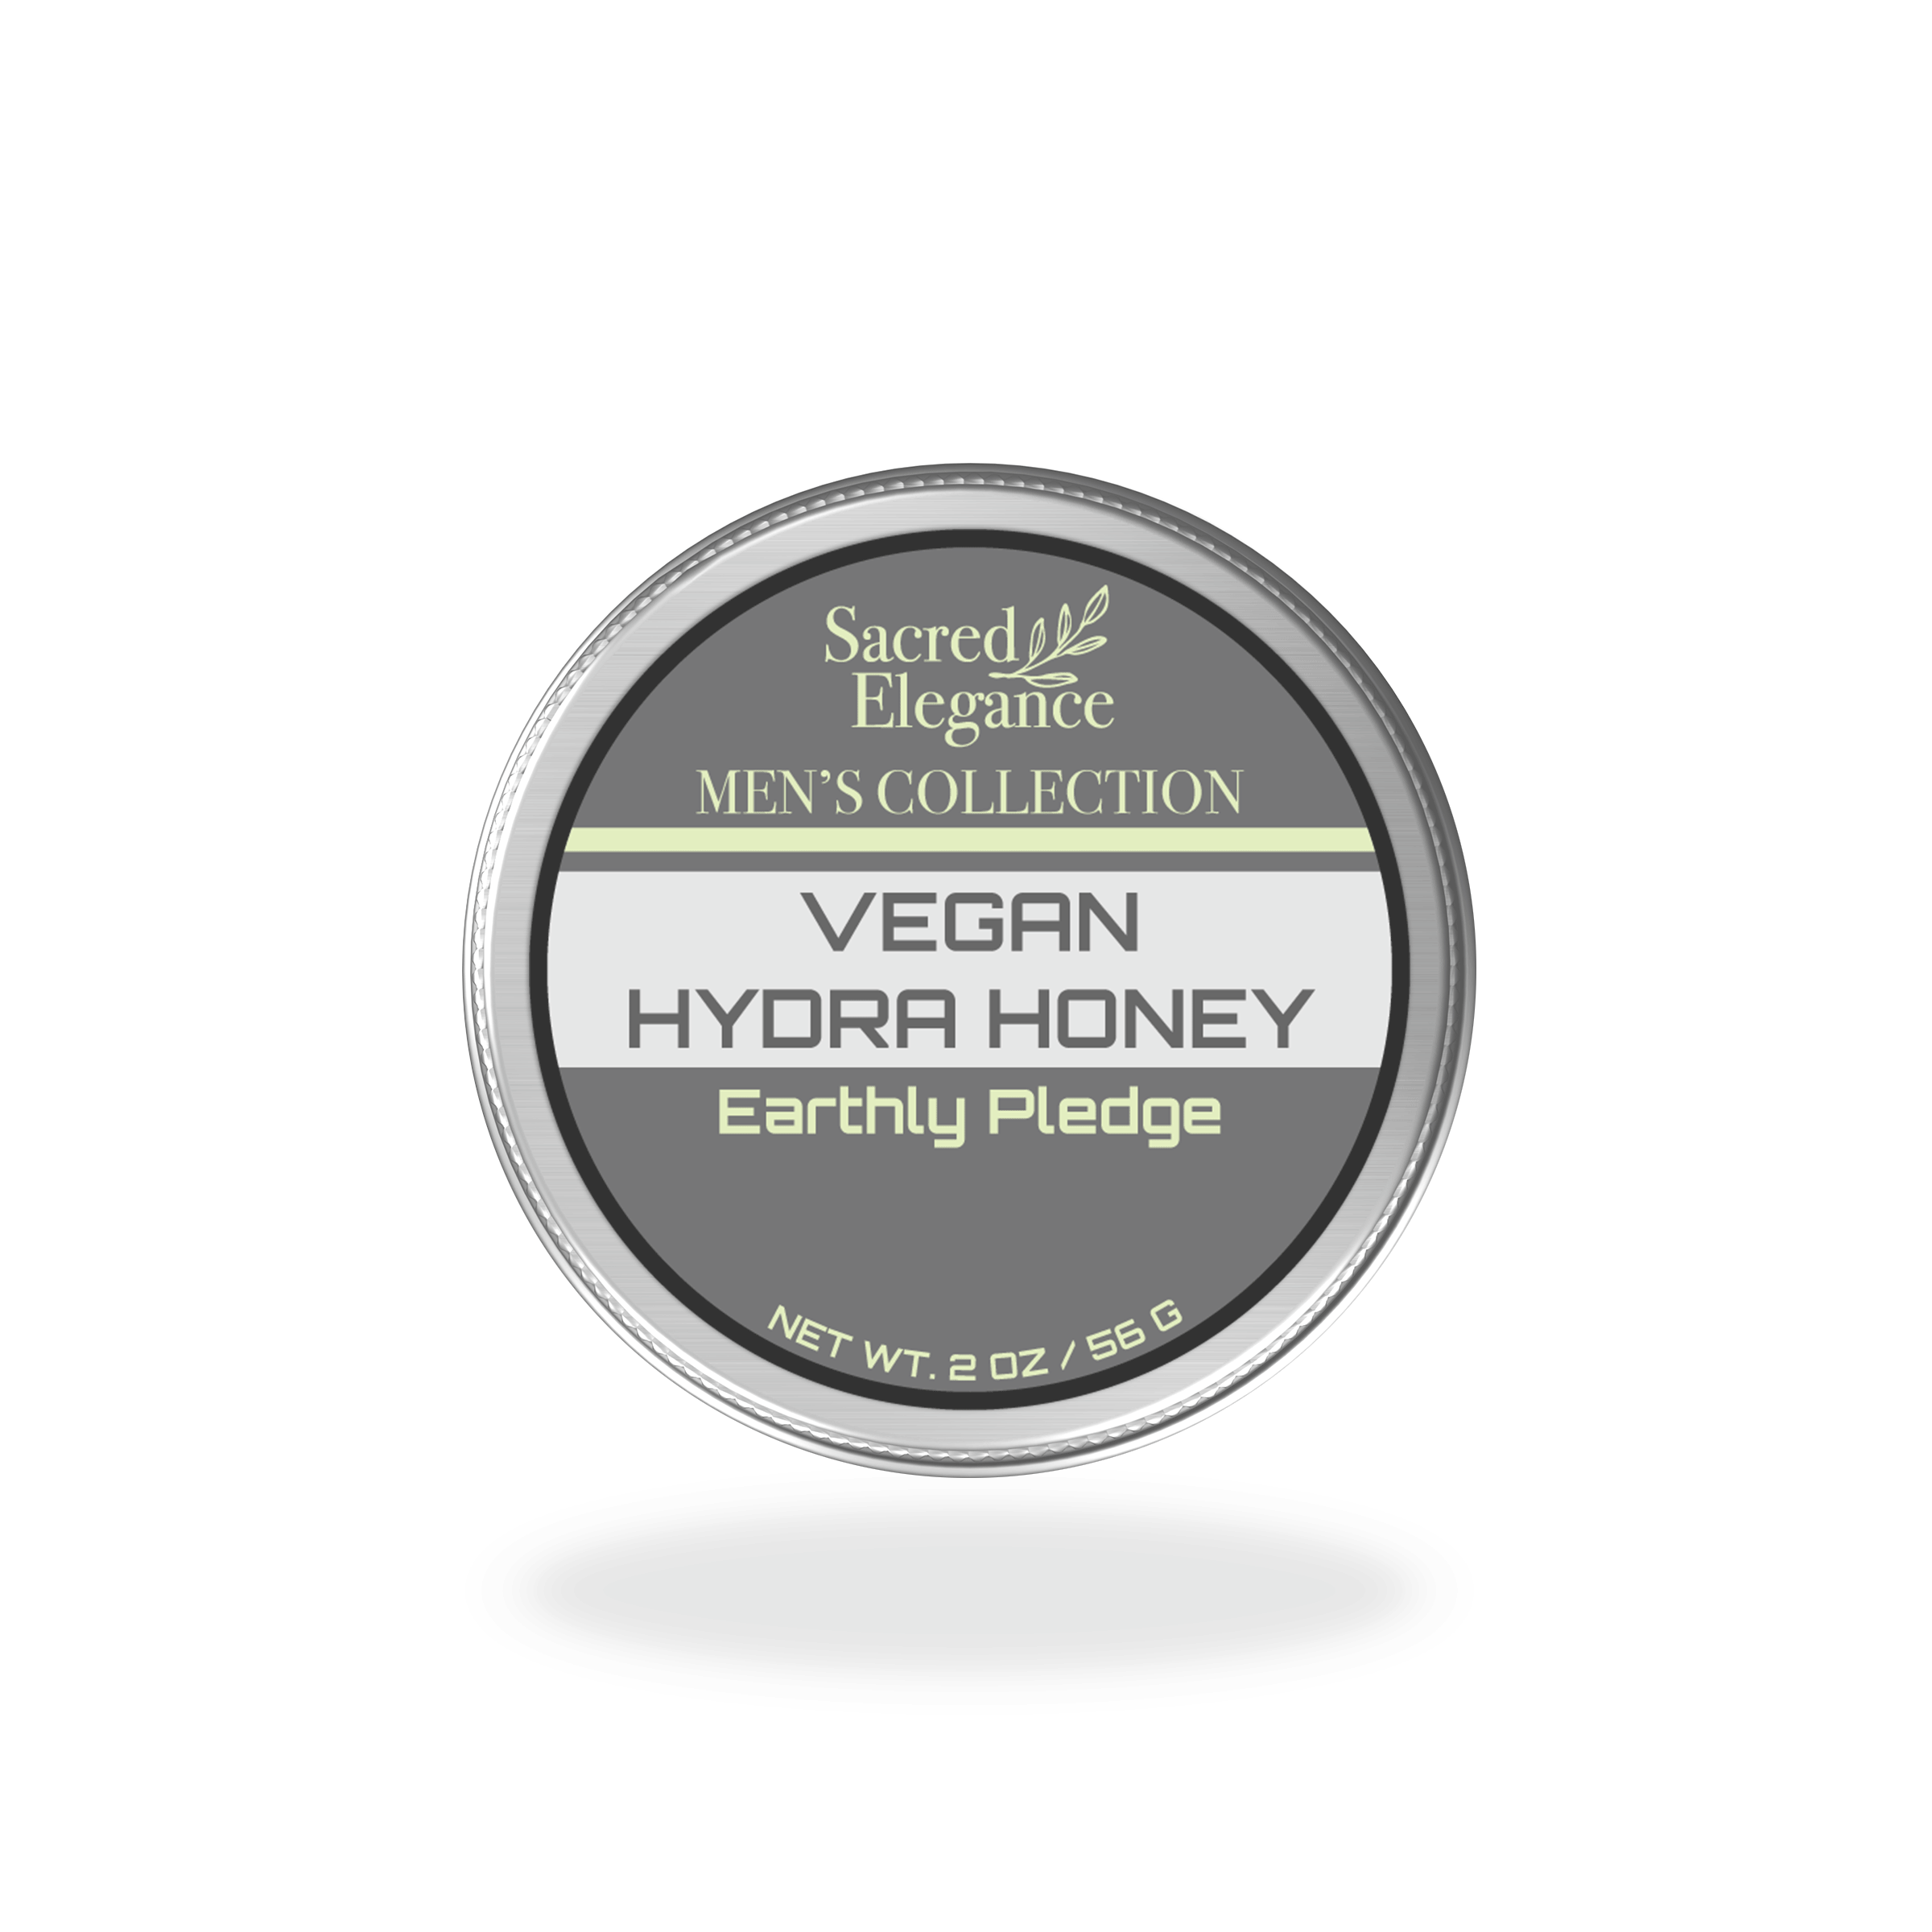 Earthly Pledge Vegan Hydra Honey